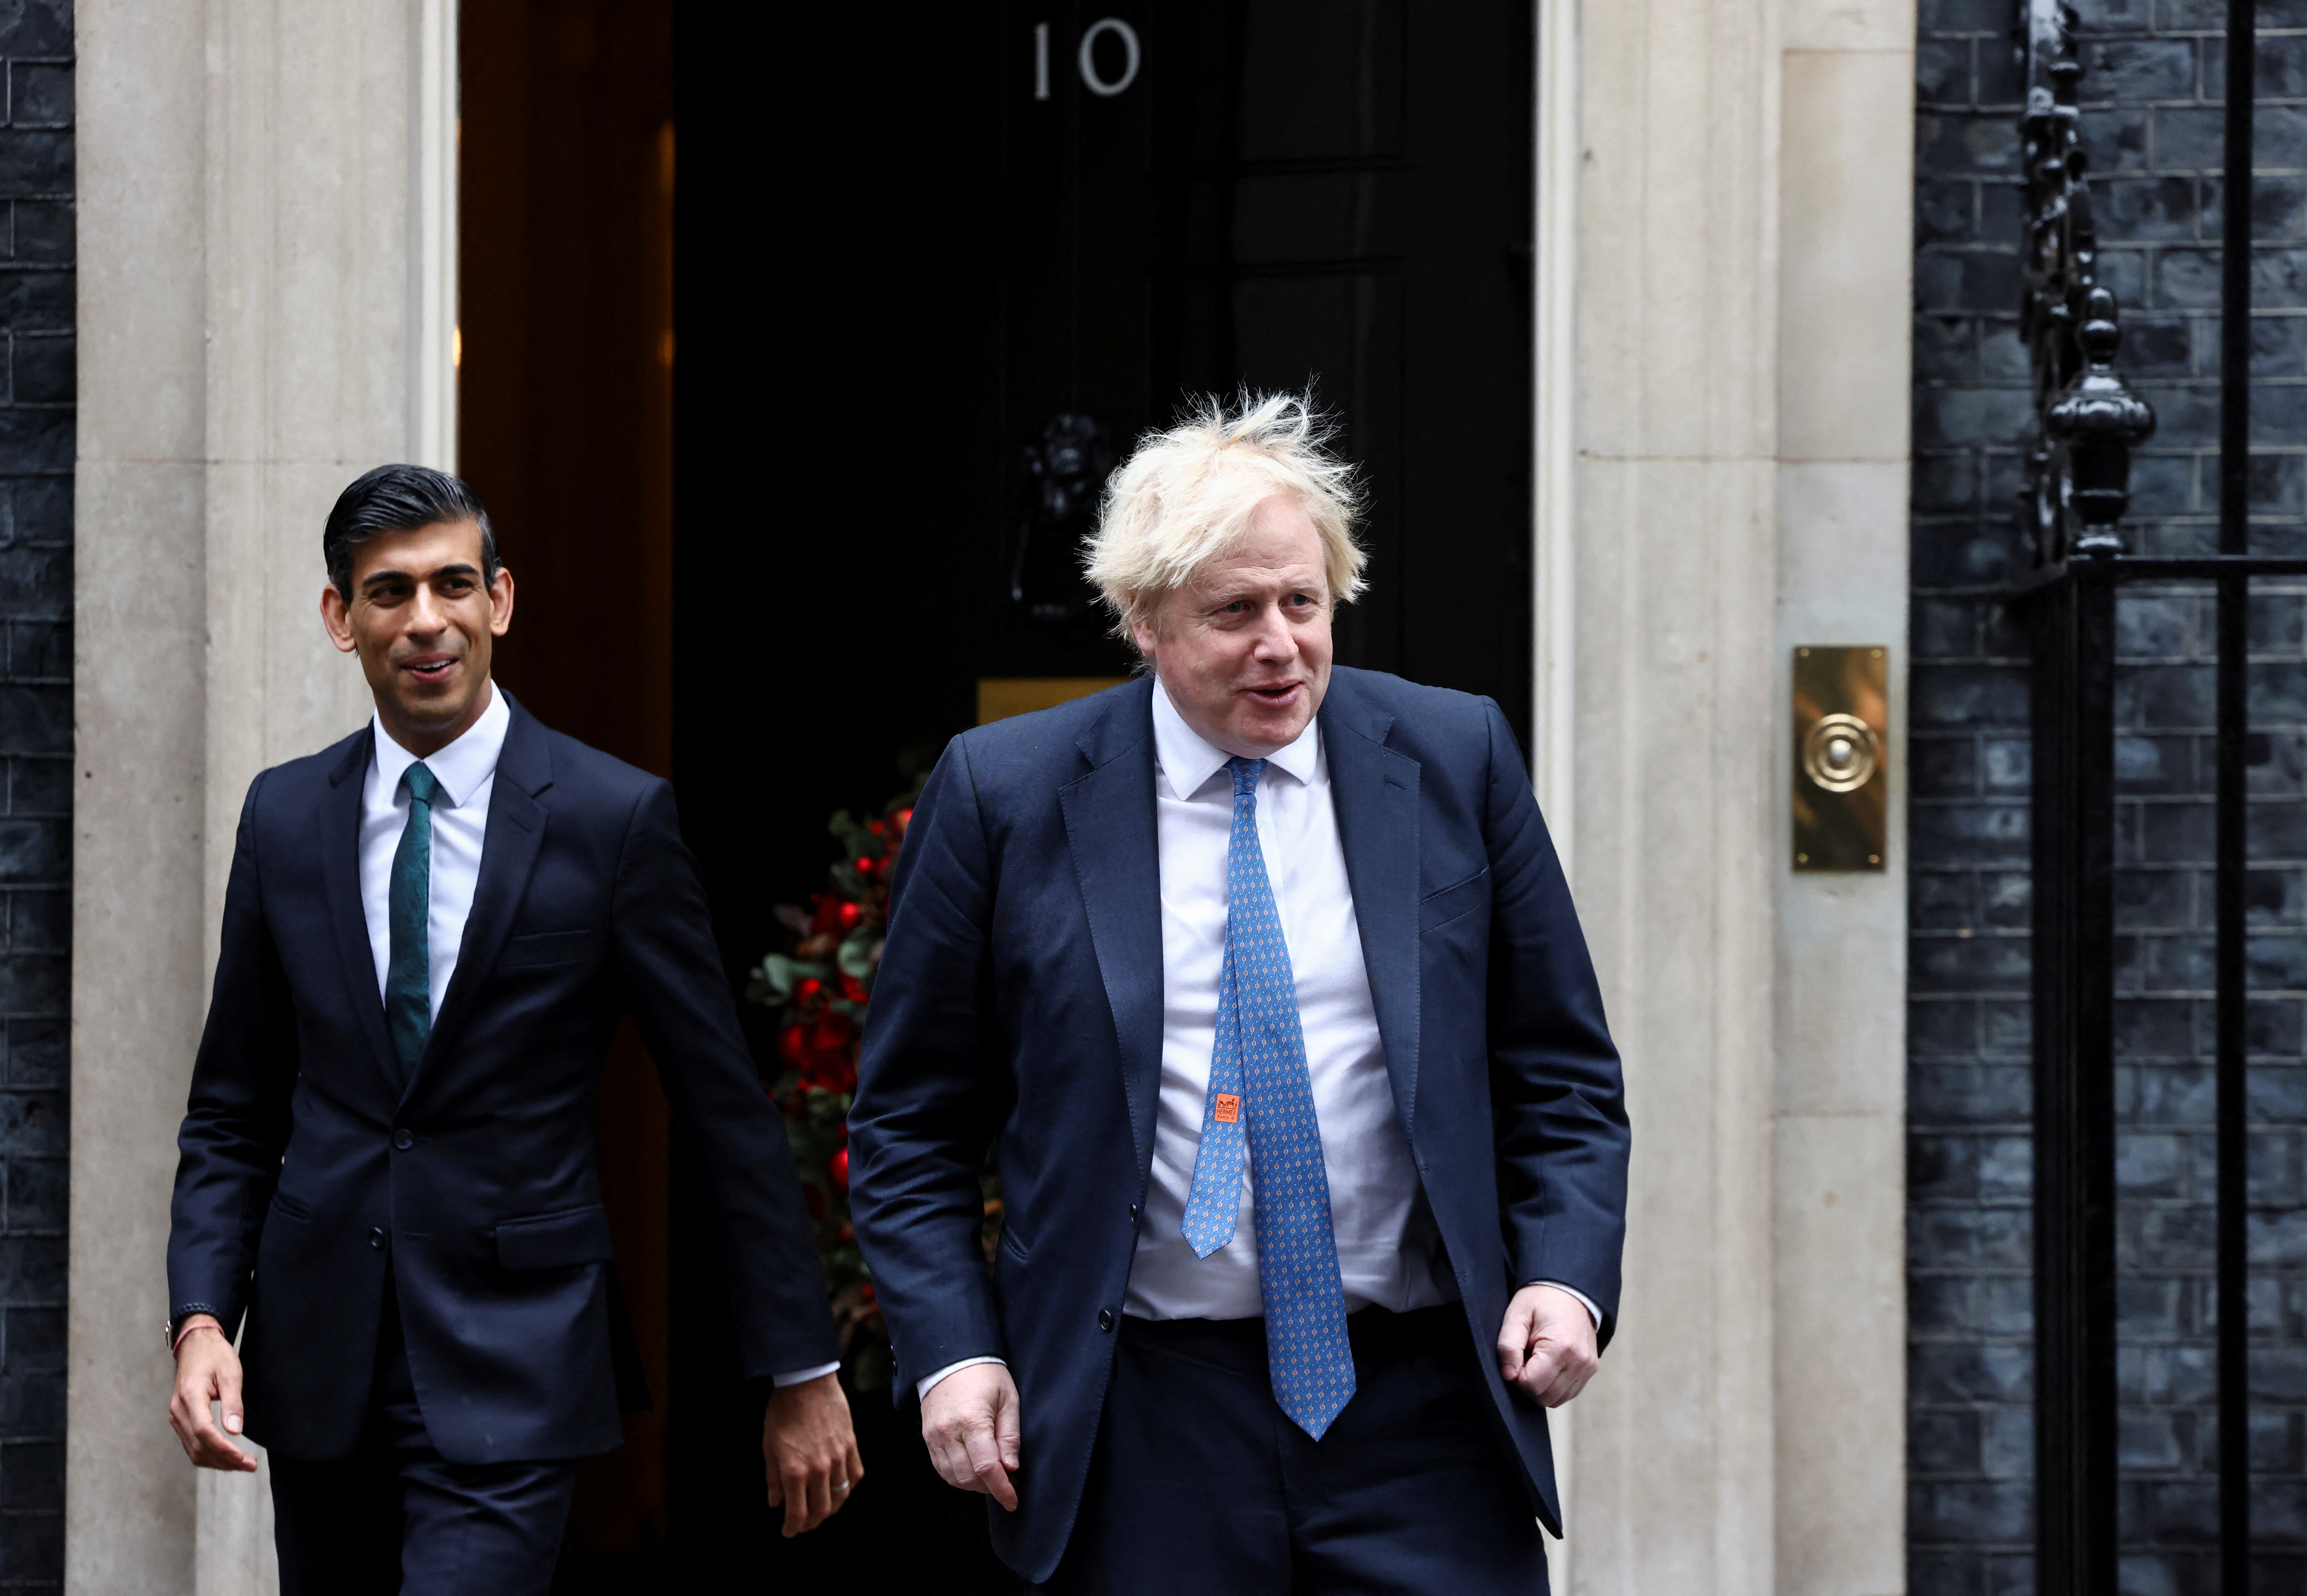 Boris Johnson meets Michelle Ovens of Small Business Saturday in London